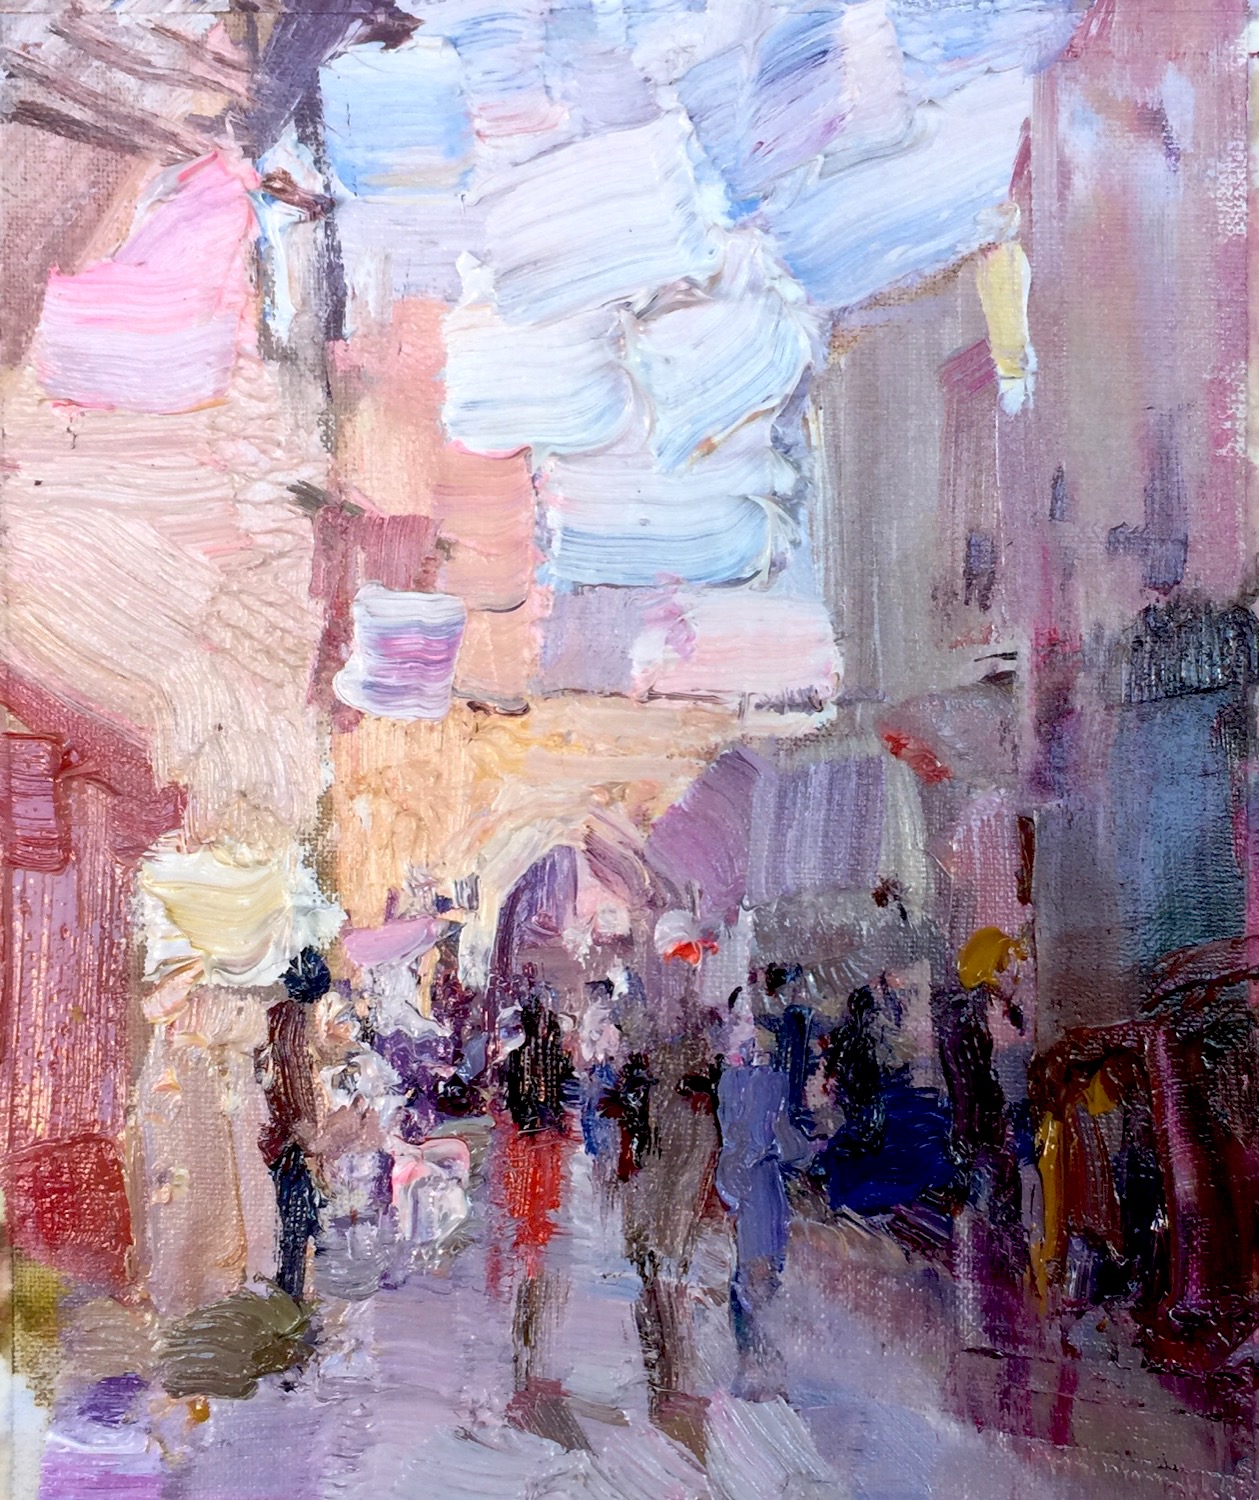 Cat. No. 1314 Marrakesh Alley - 20cm x 15cm? - Oil on Canvas - 2020 